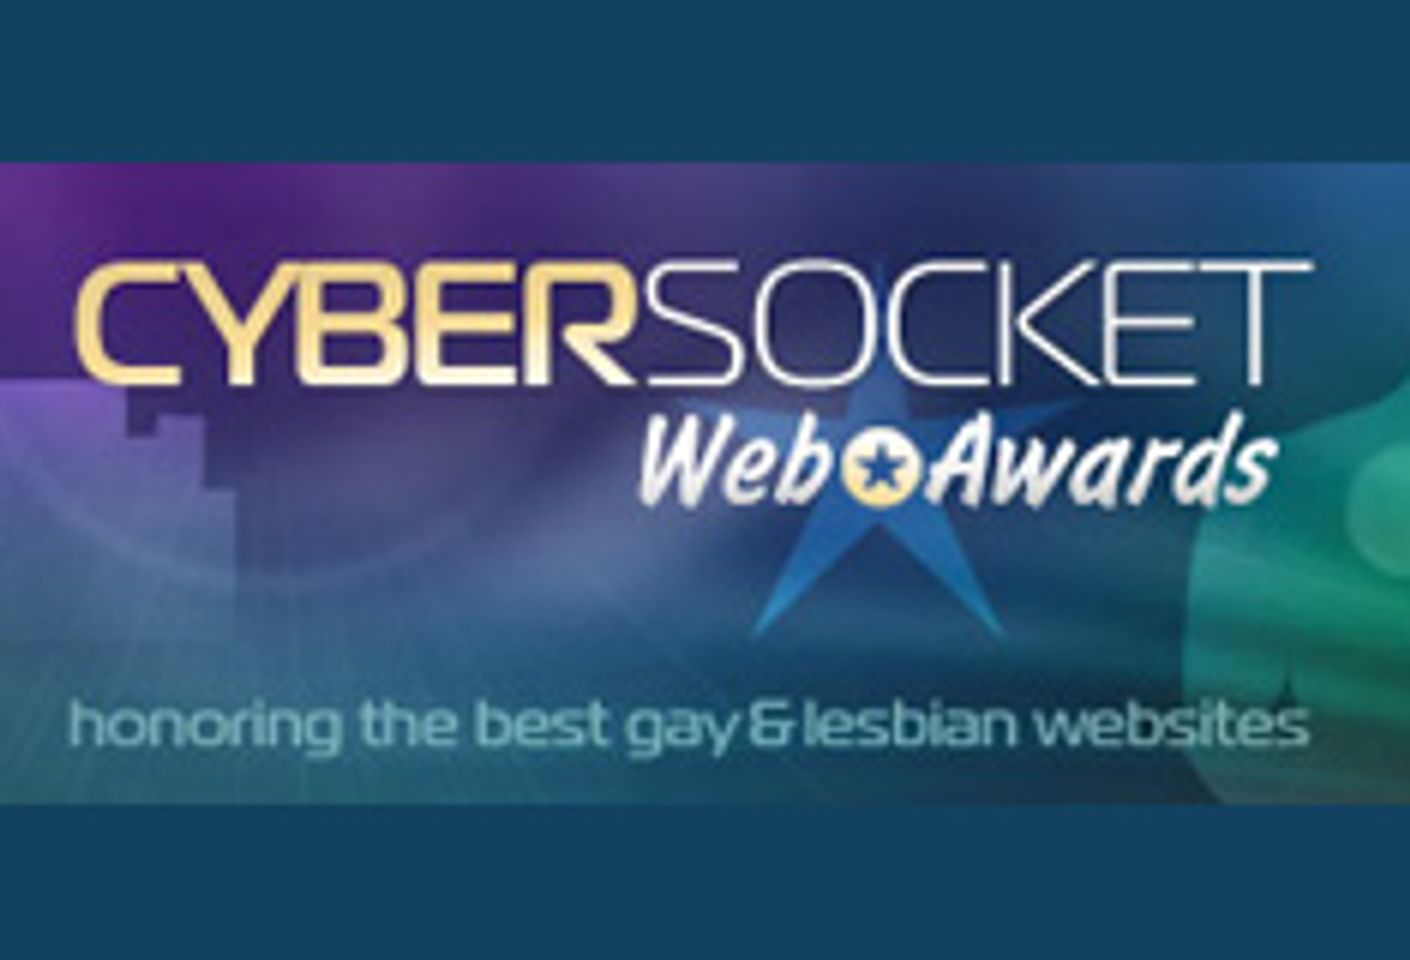 Cybersocket Web Awards Held Tonight in Hollywood